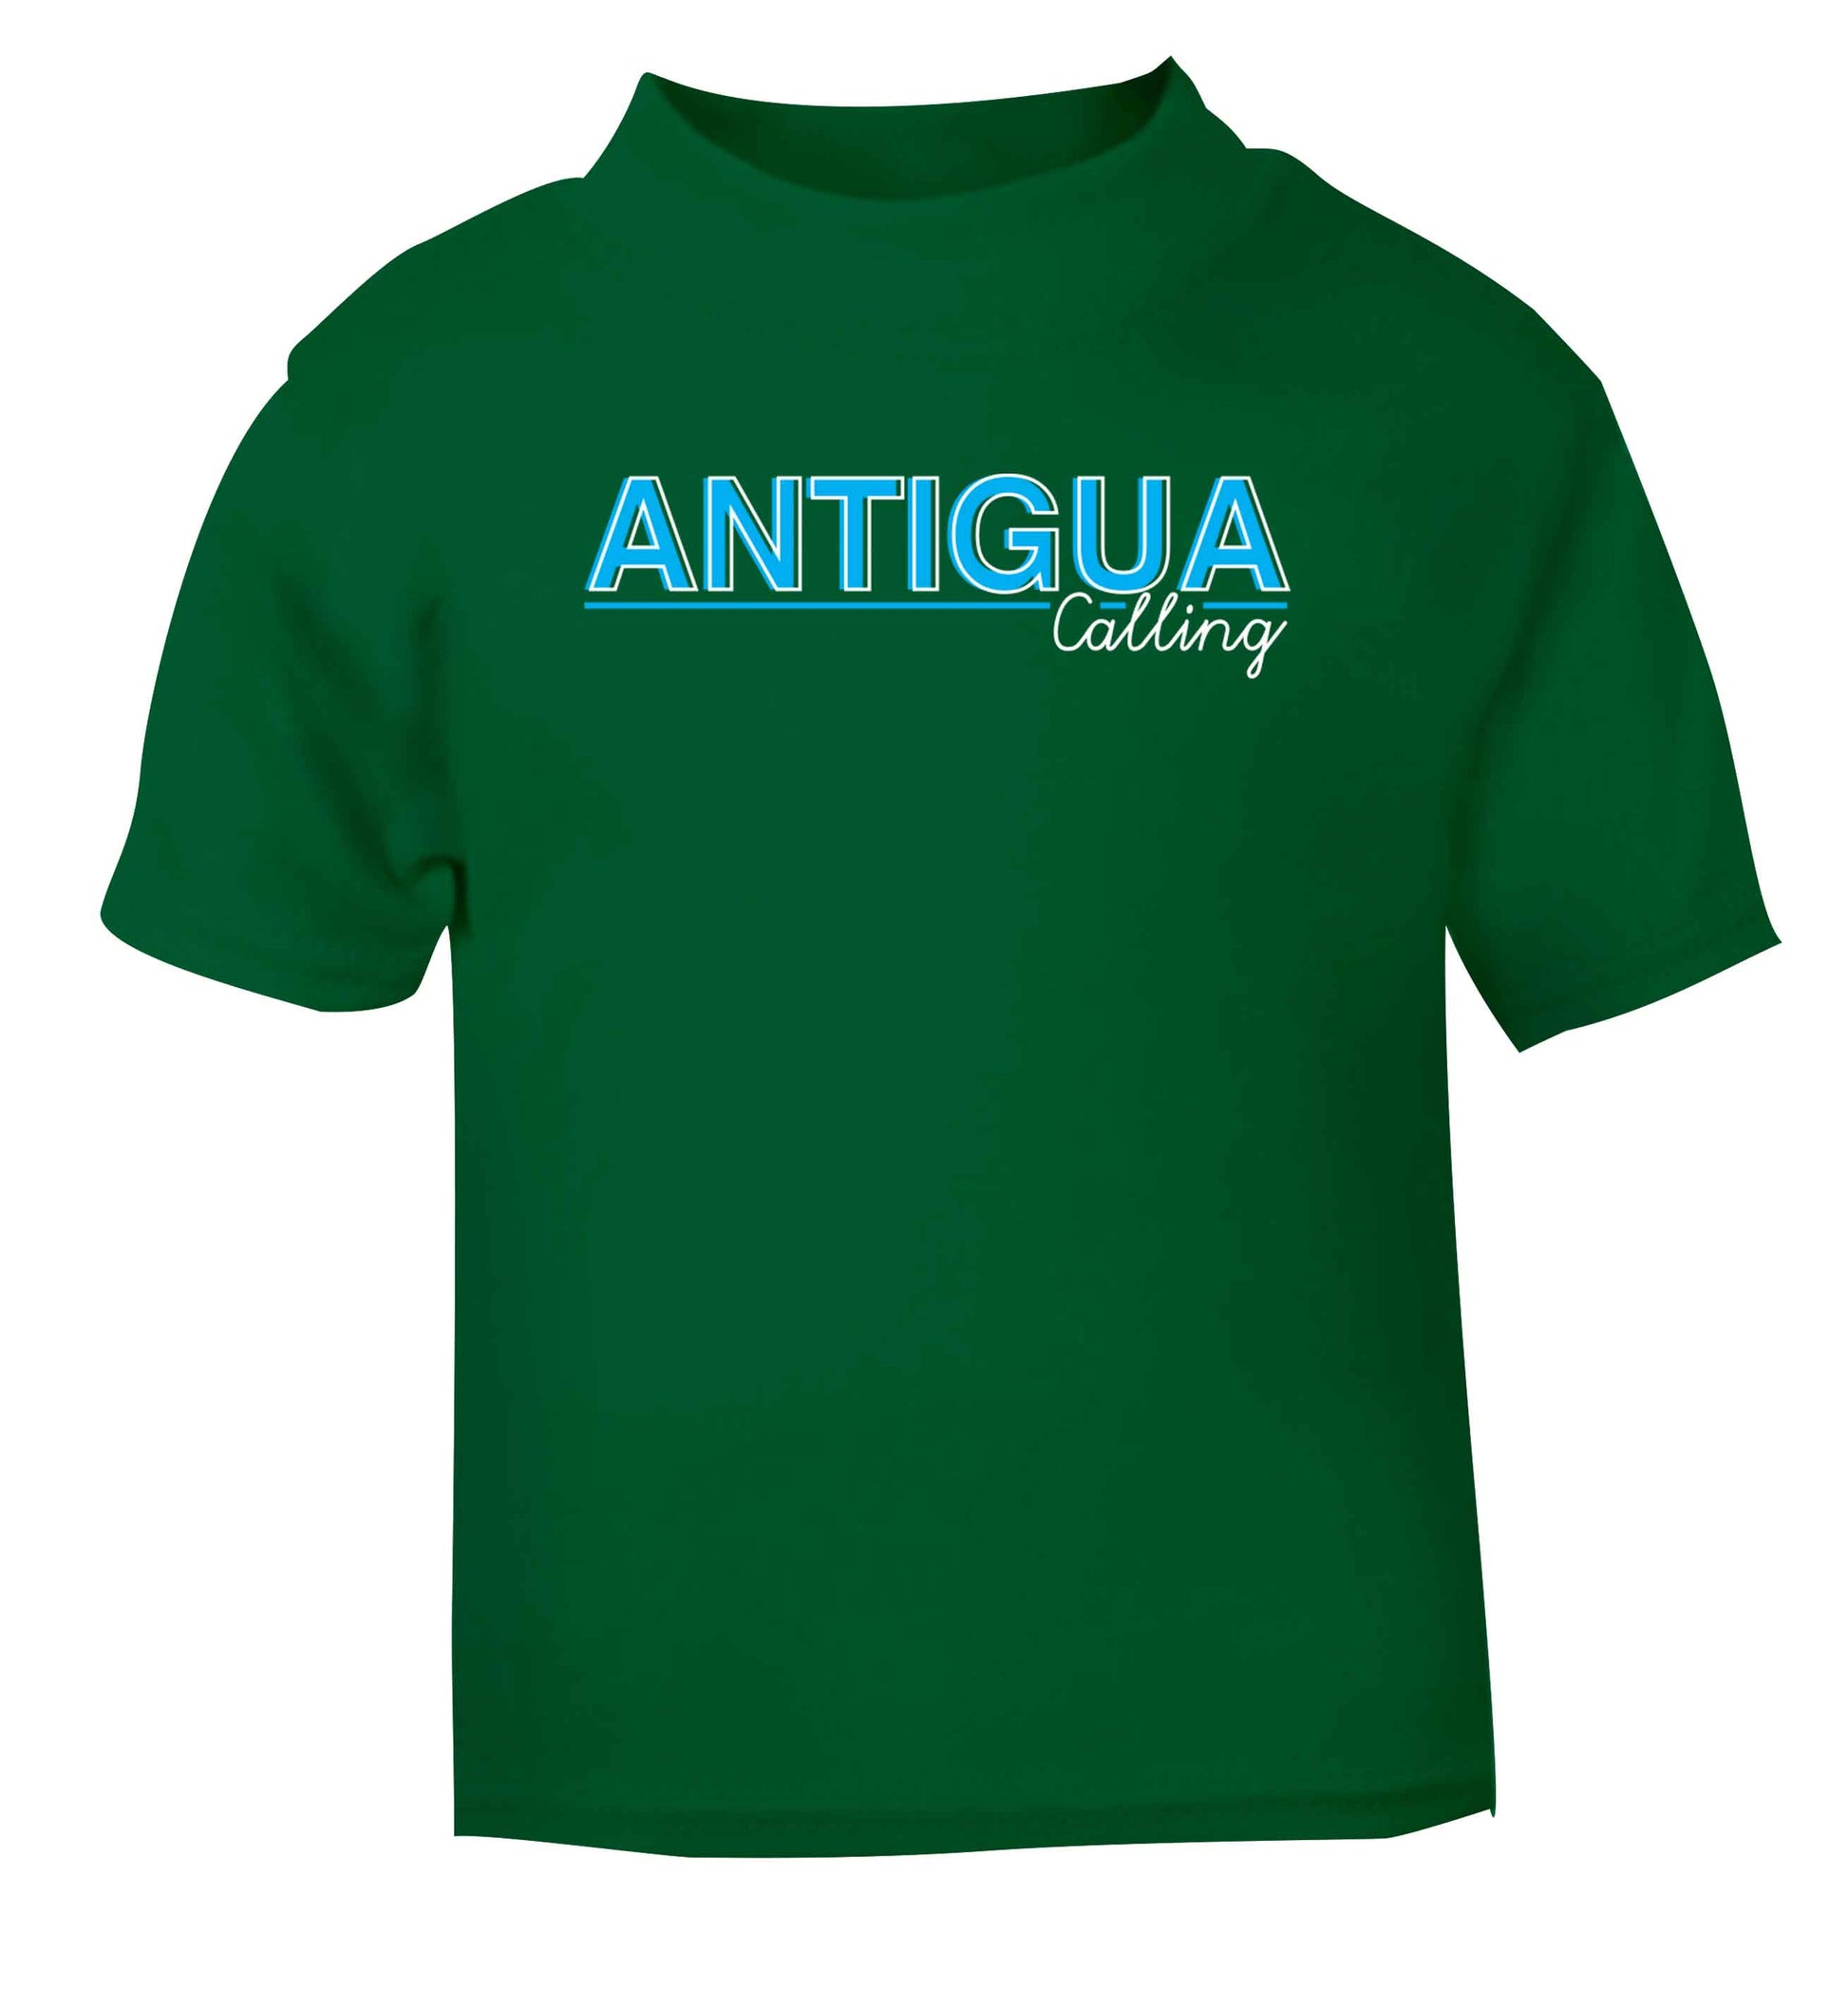 Antigua calling green Baby Toddler Tshirt 2 Years